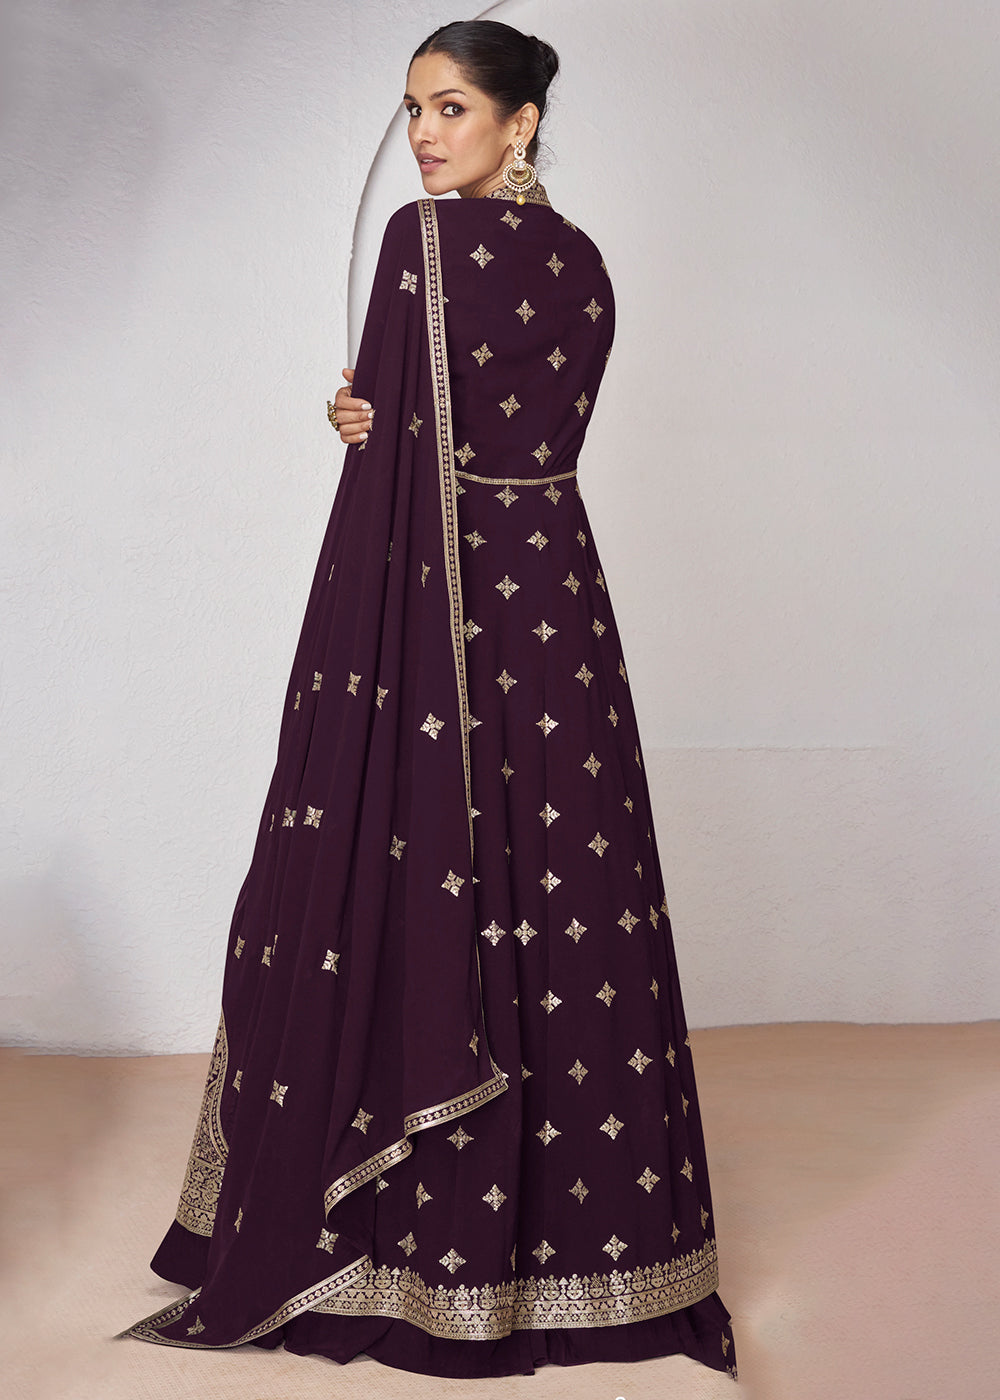 Buy Now Wedding Wear Plum Purple Lehenga Skirt Anarkali Suit Online in USA, UK, Australia, New Zealand, Canada & Worldwide at Empress Clothing.